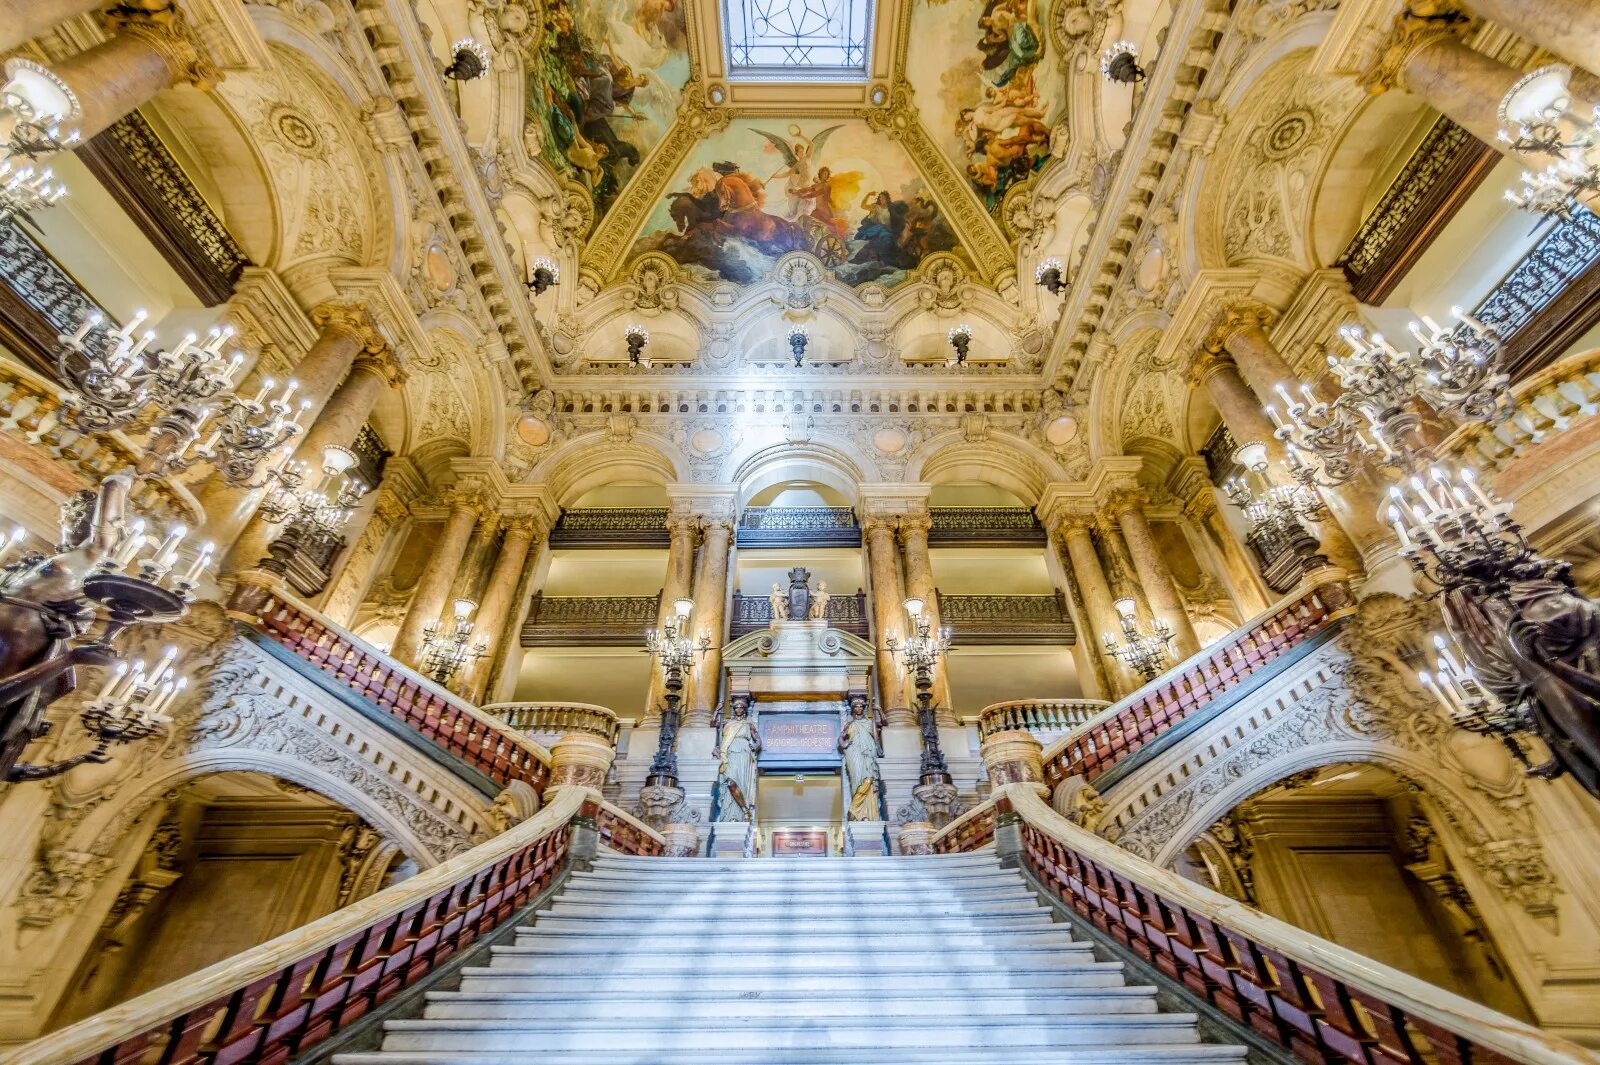 Опера Гарнье парадная лестница. Опера Гарнье Париж лестница. Парадная лестница в Гранд опера в Париже. Парижская опера, дворец Гарнье, Франция.